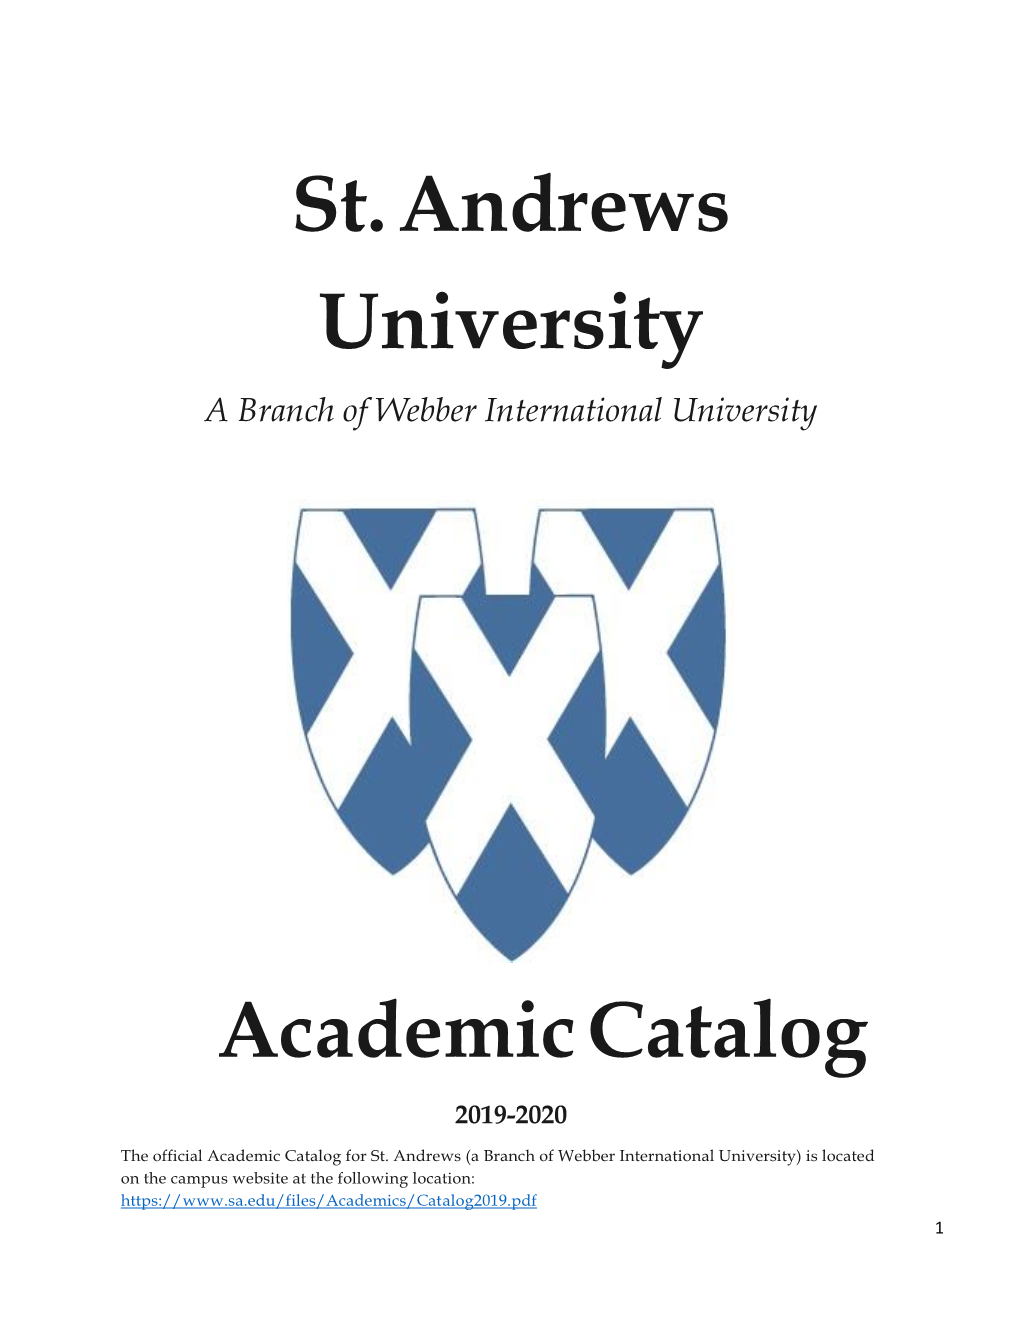 St. Andrews University Academic Catalog